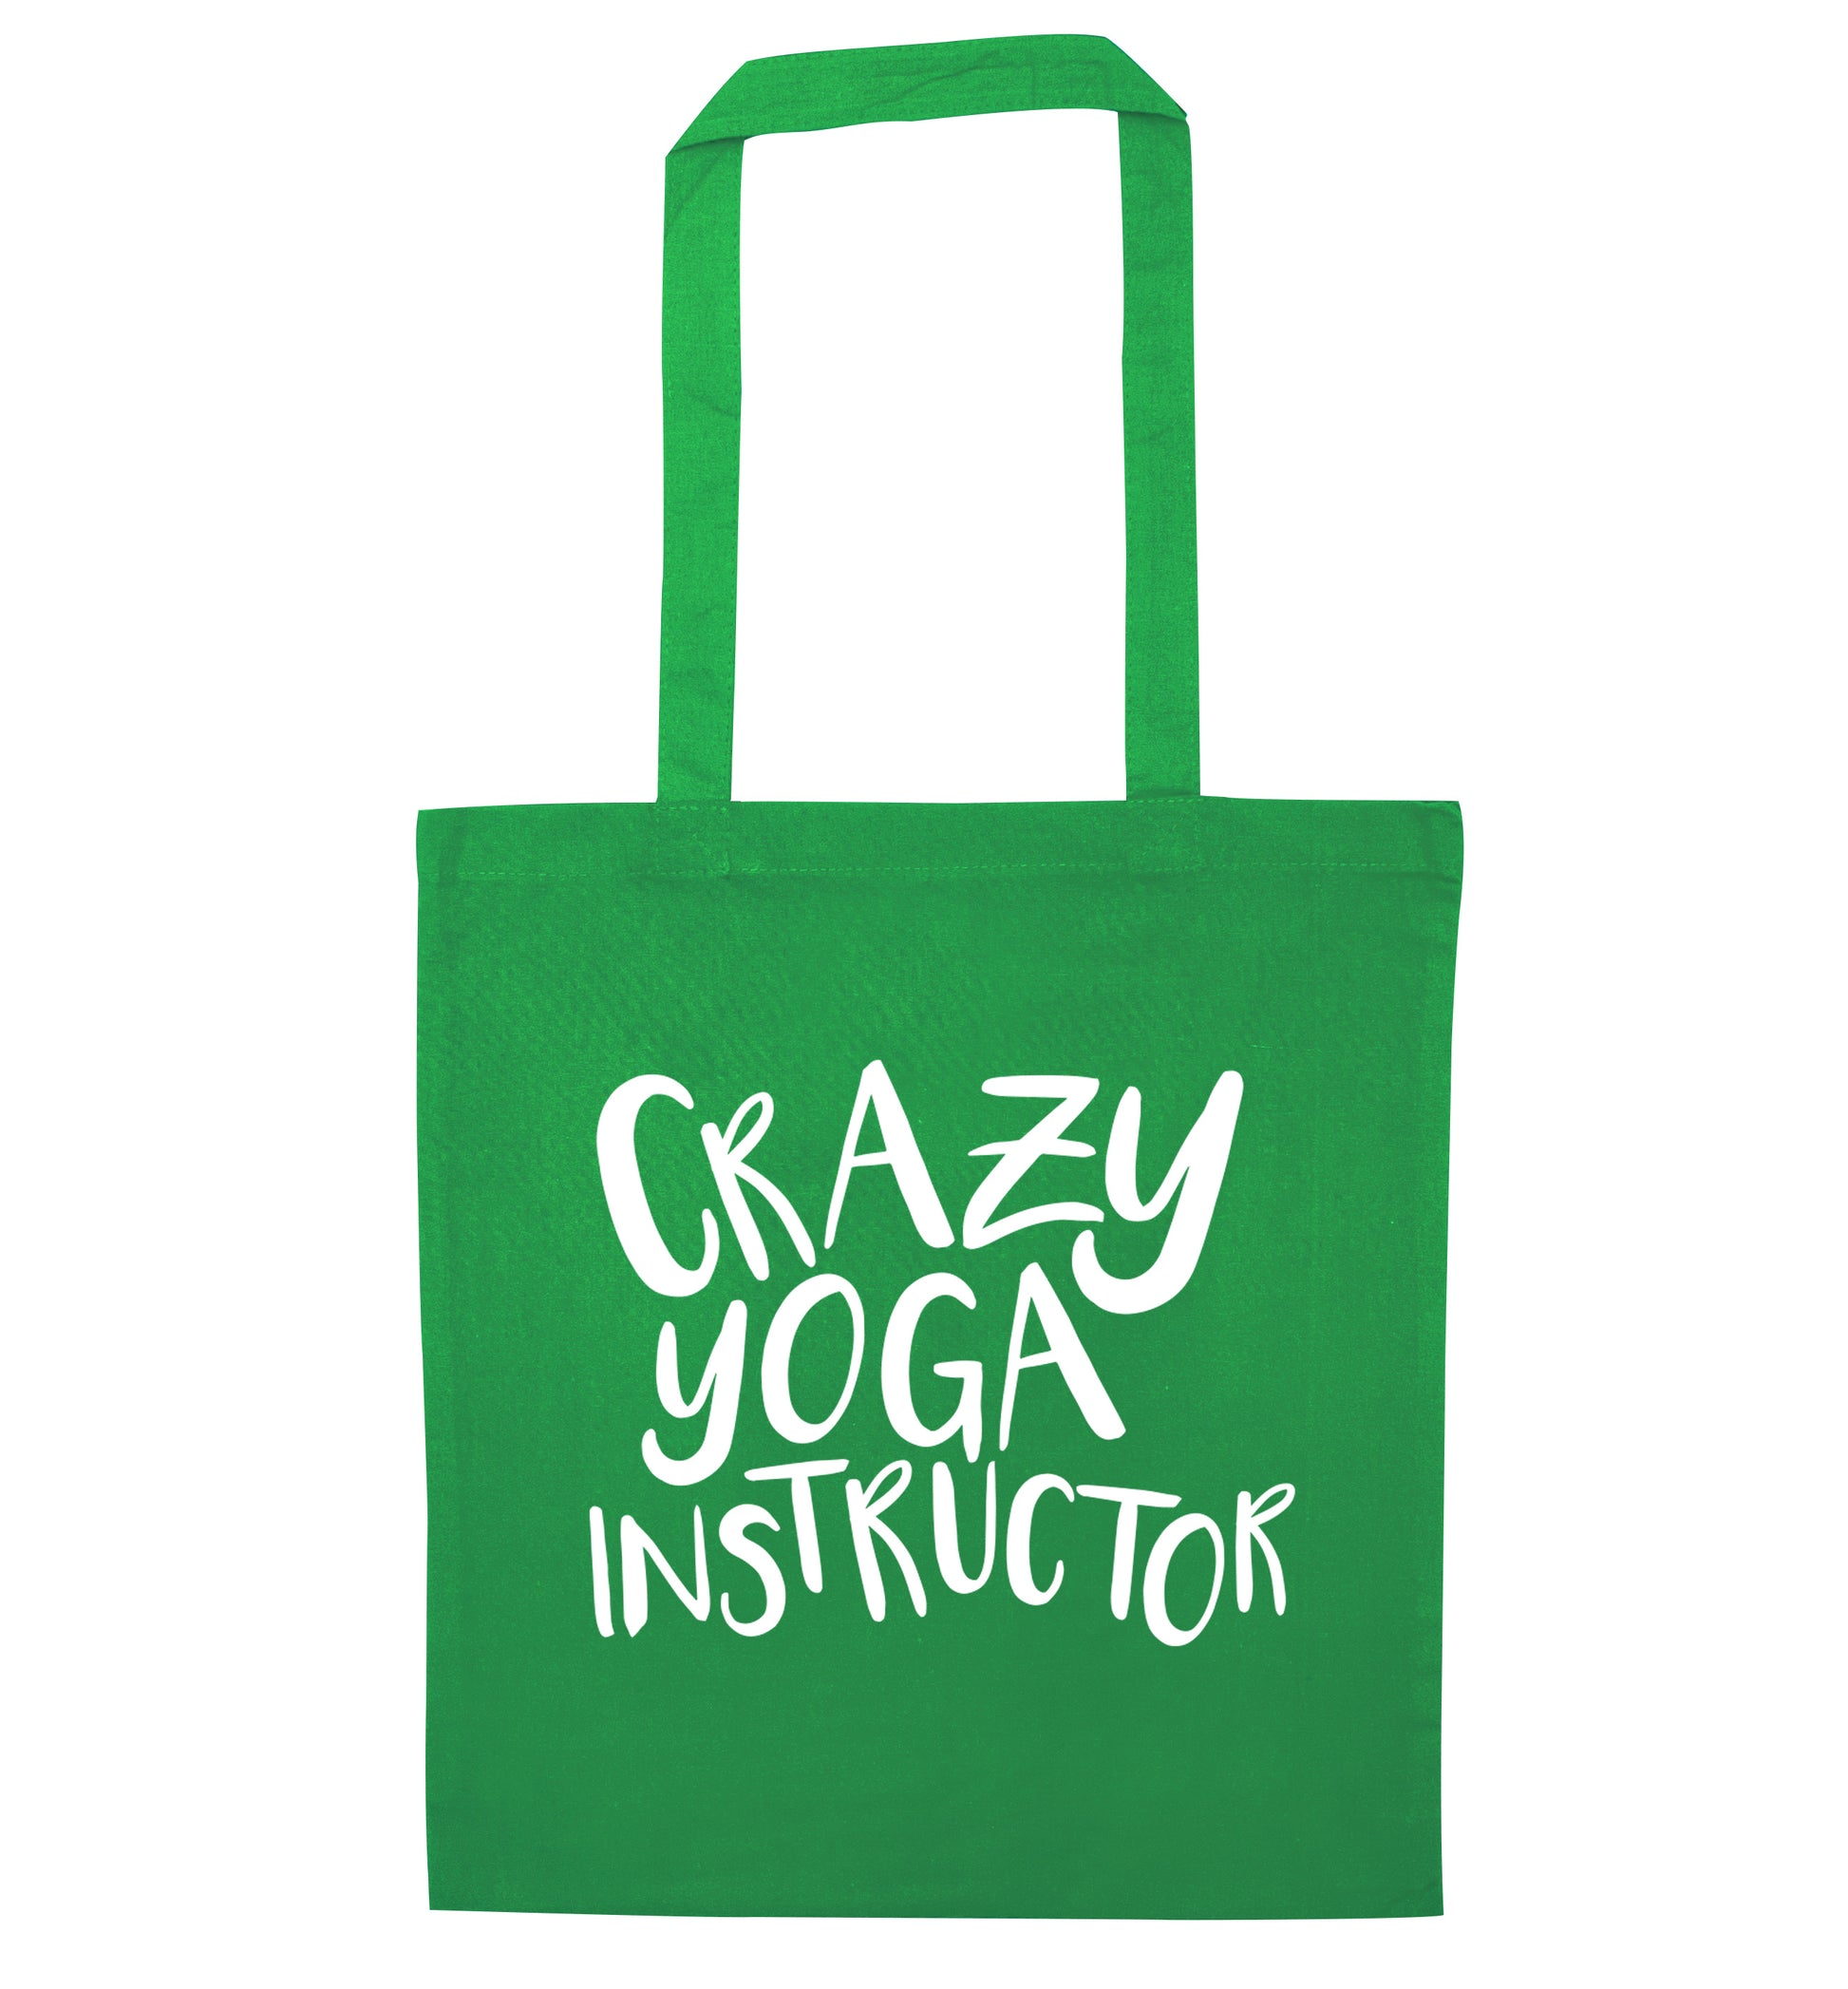 Crazy yoga instructor green tote bag